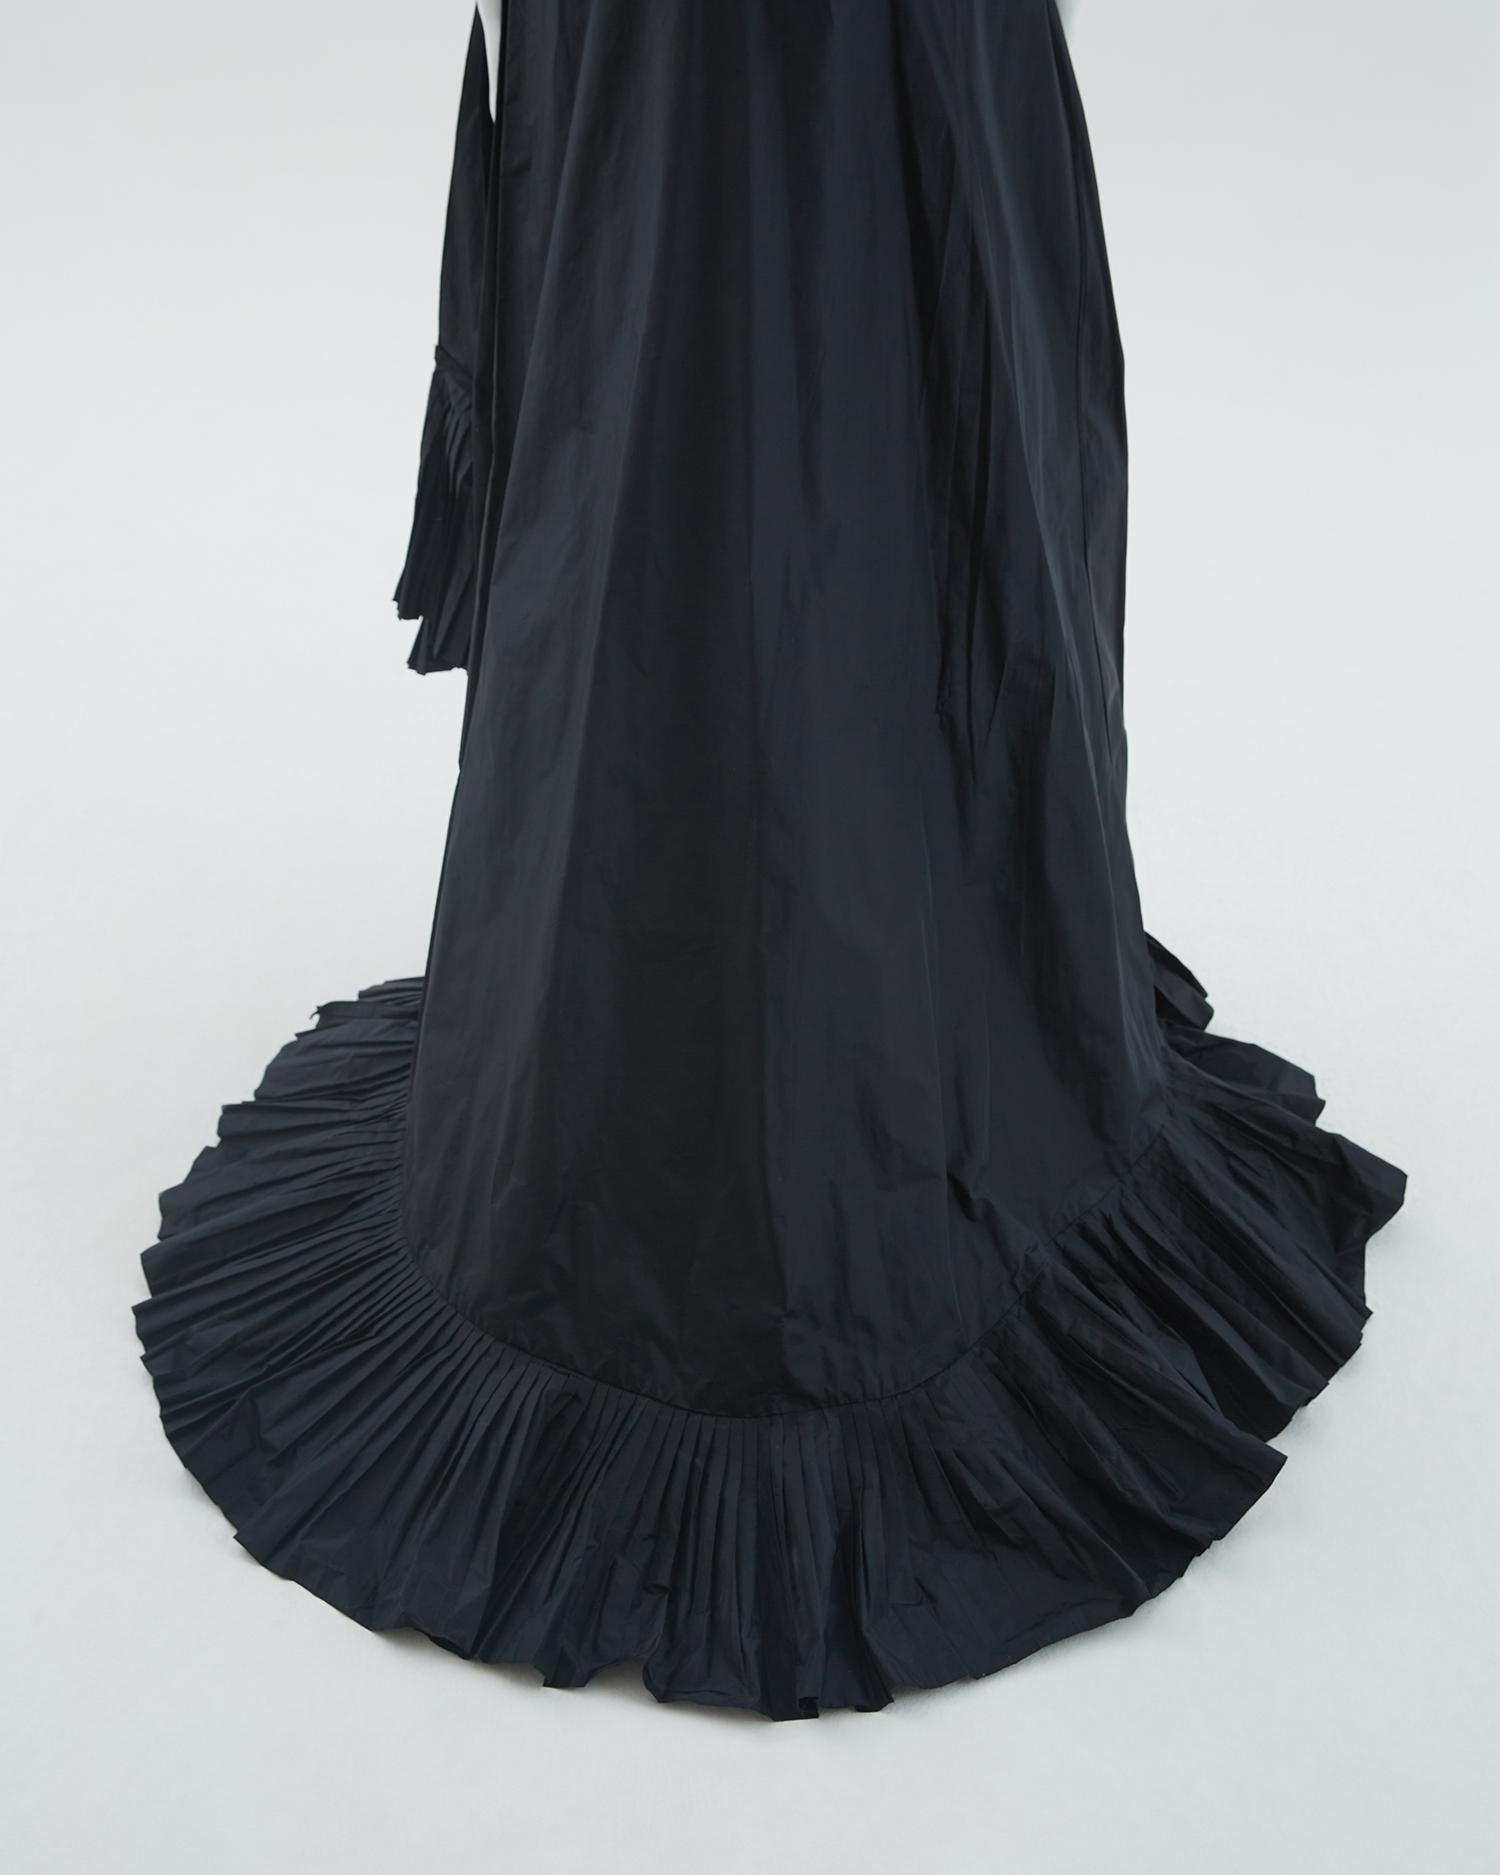 Gianfranco Ferrè F/W 2000 black plated  taffeta skirt and white silk blouse set For Sale 9